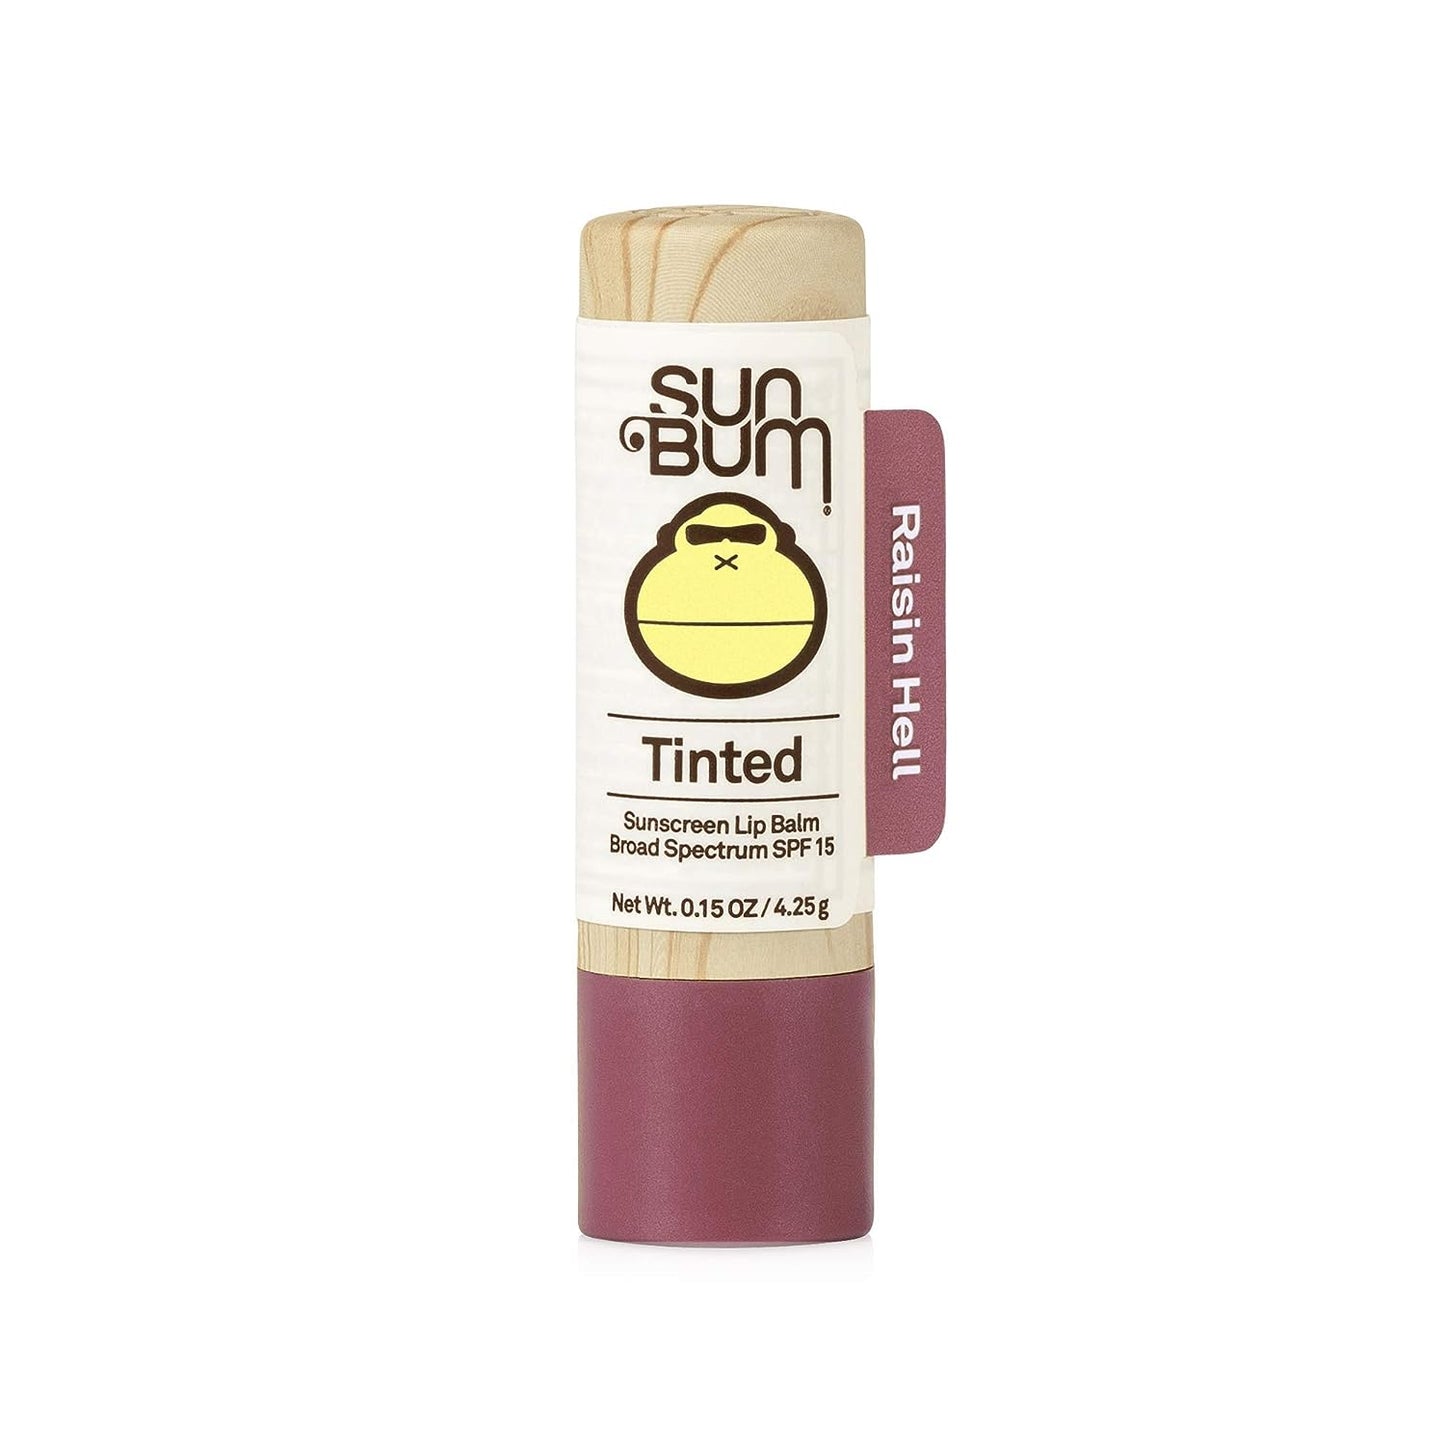 Sun Bum Tinted Sunscreen Lip Balm SPF 15 0.15 oz. / 4.25g